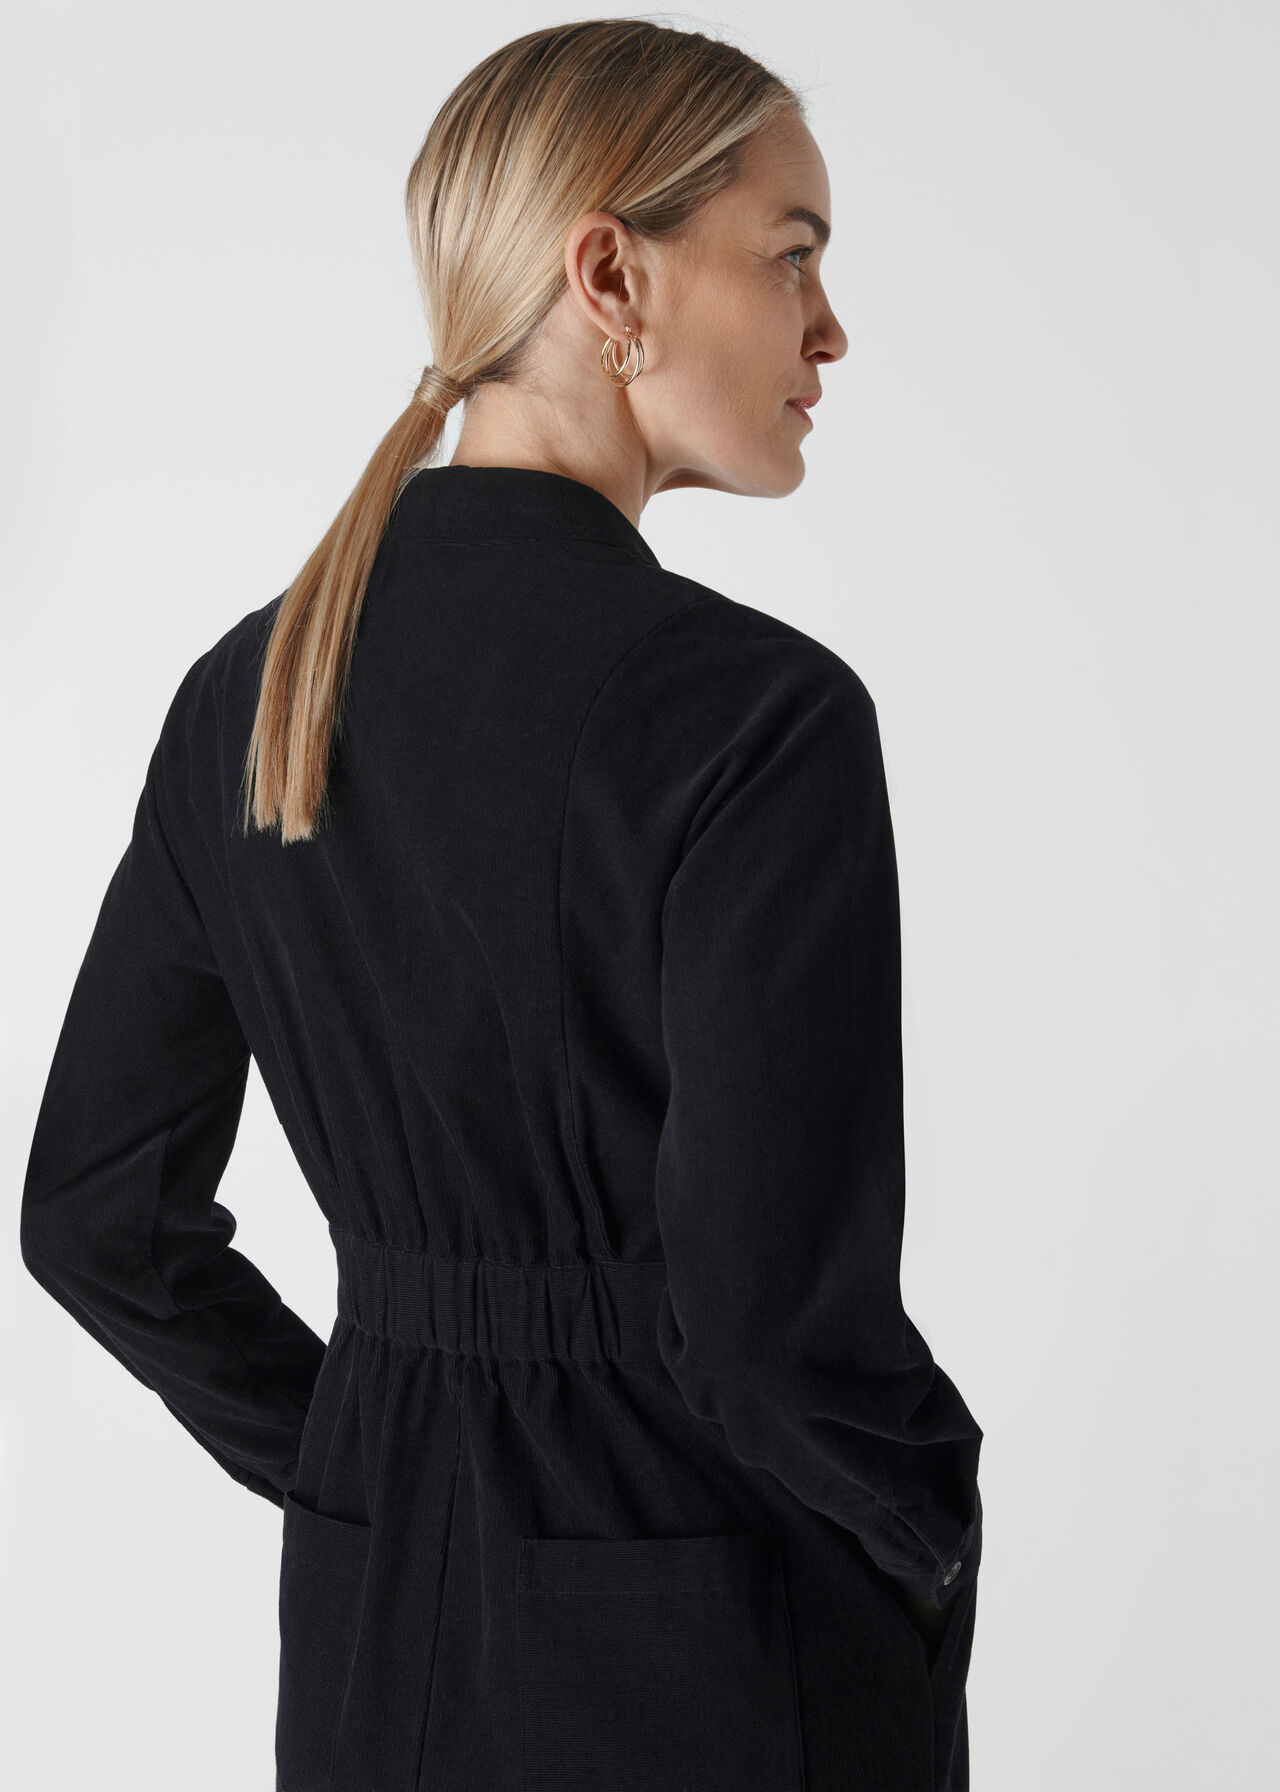 Romaine Cord Dress Black